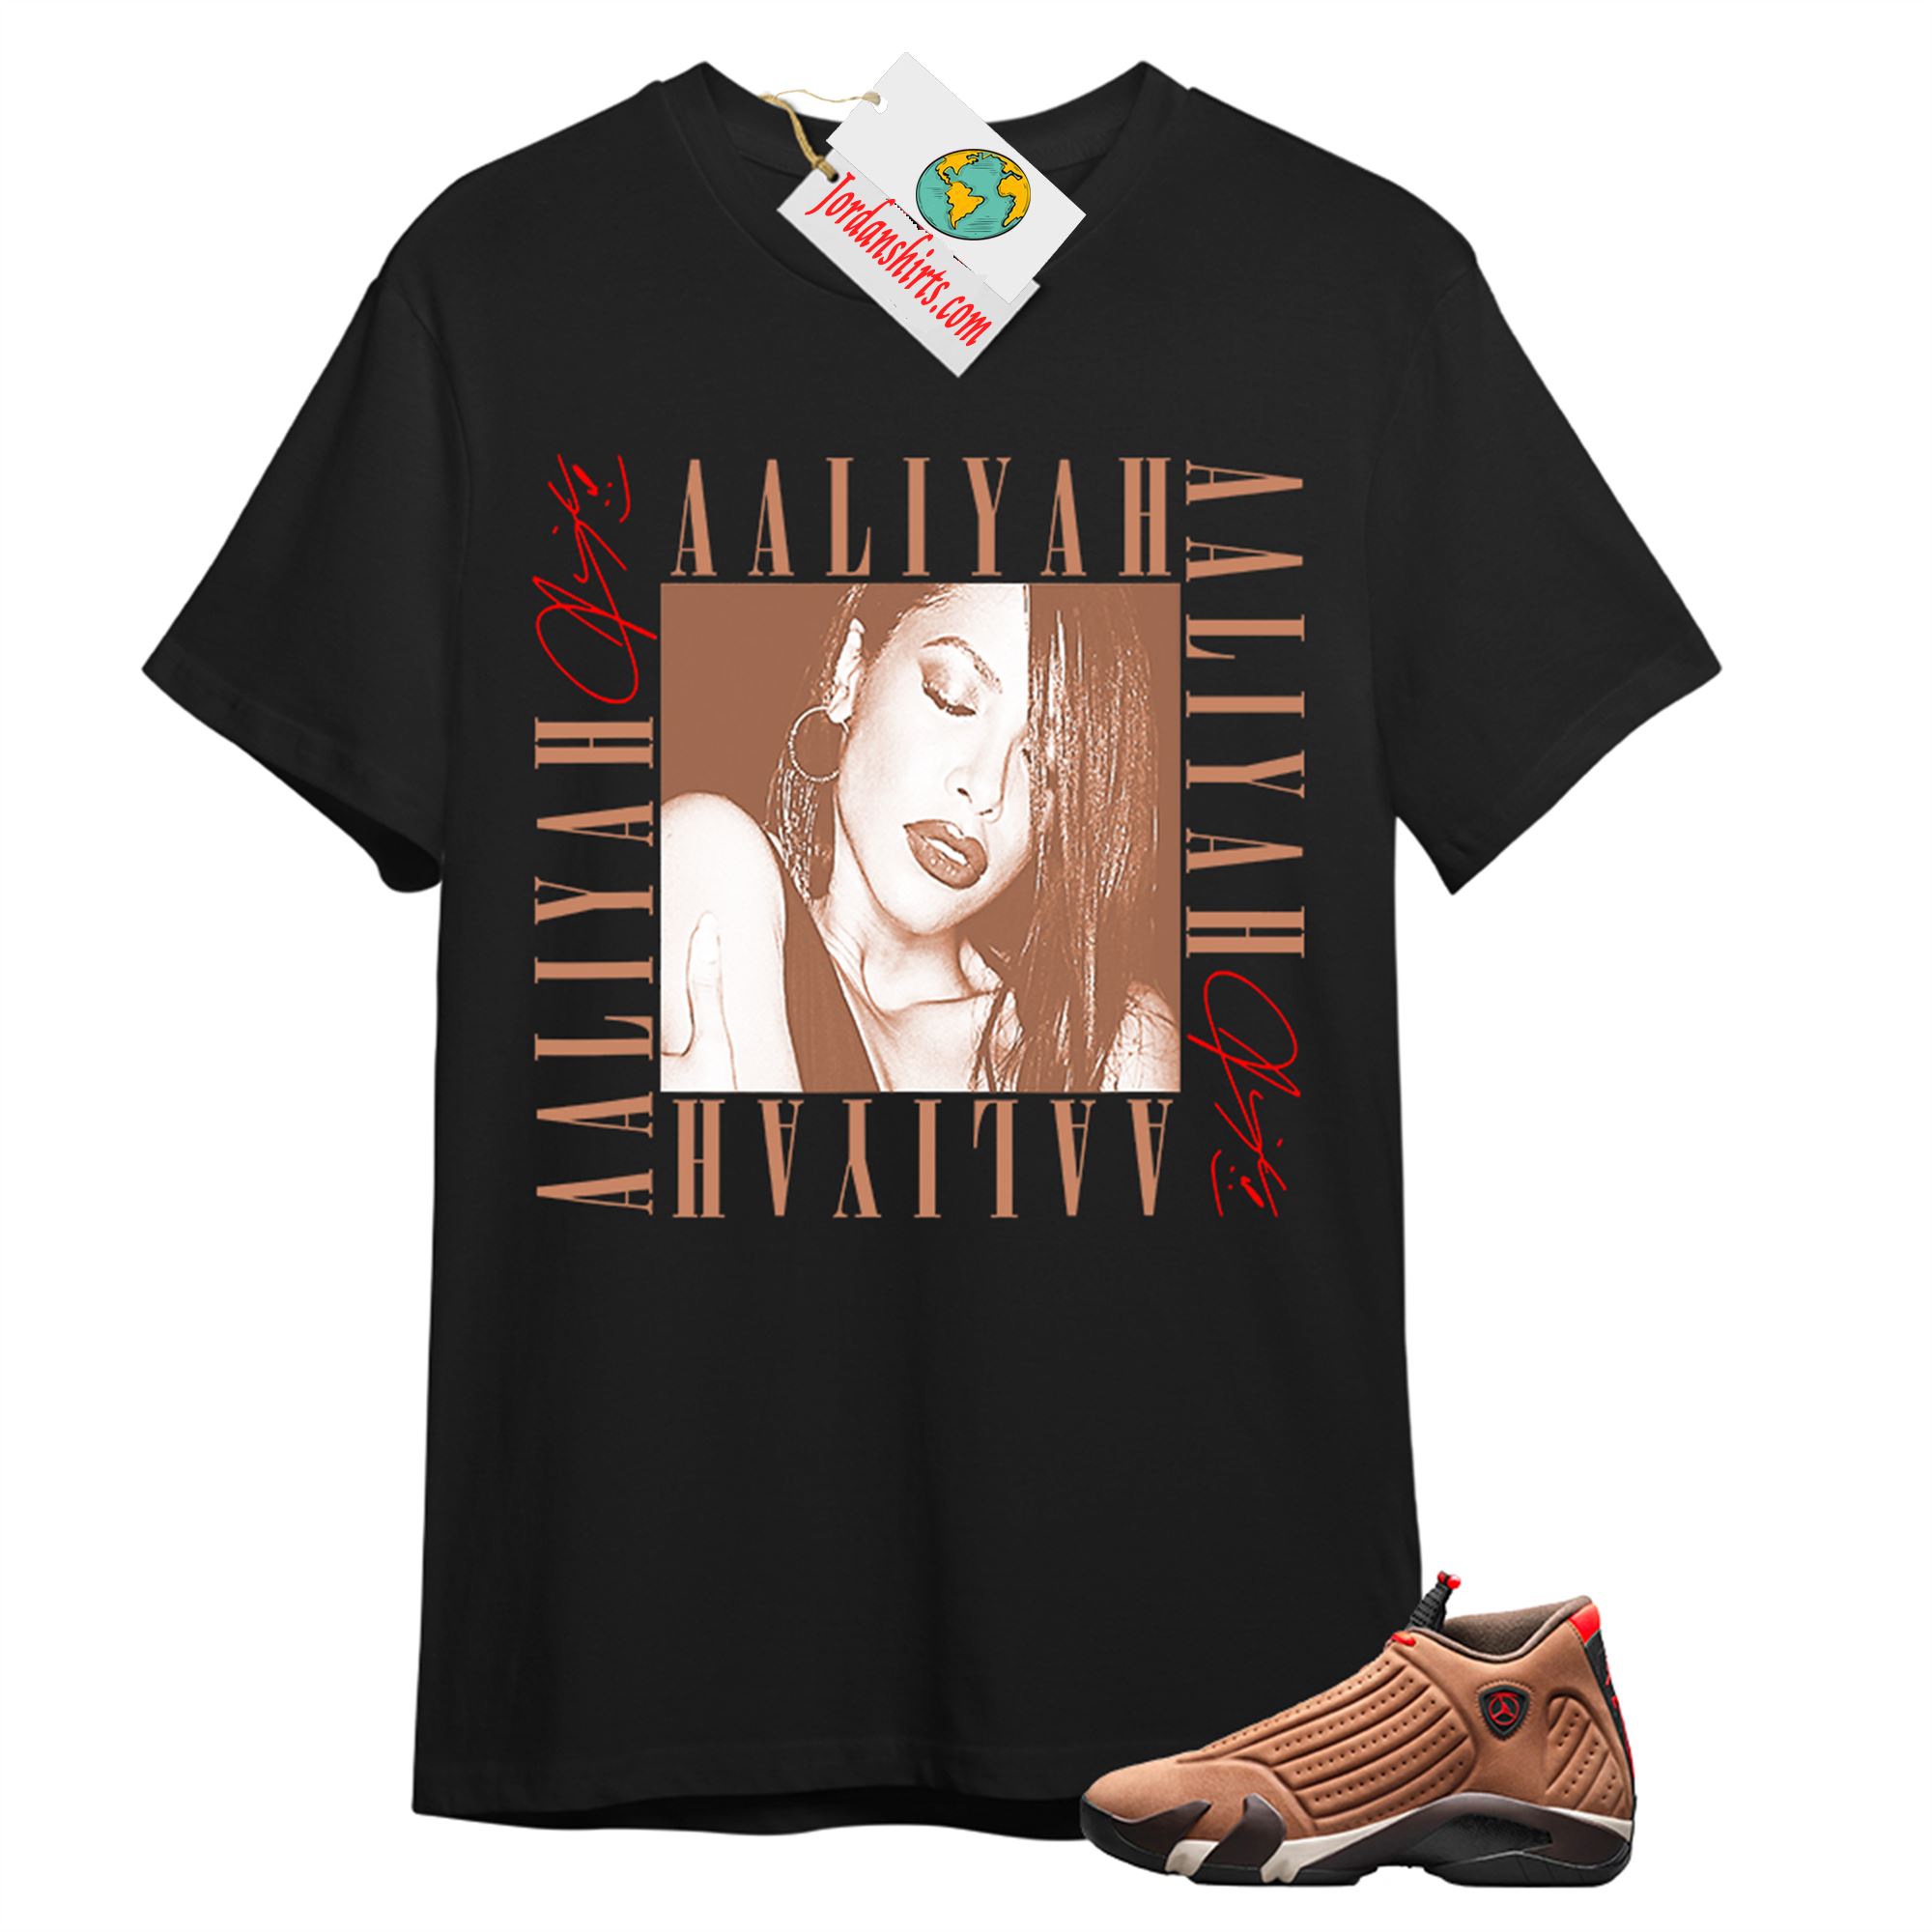 Jordan 14 Shirt, Aaliyah Box Black T-shirt Air Jordan 14 Winterized 14s Size Up To 5xl